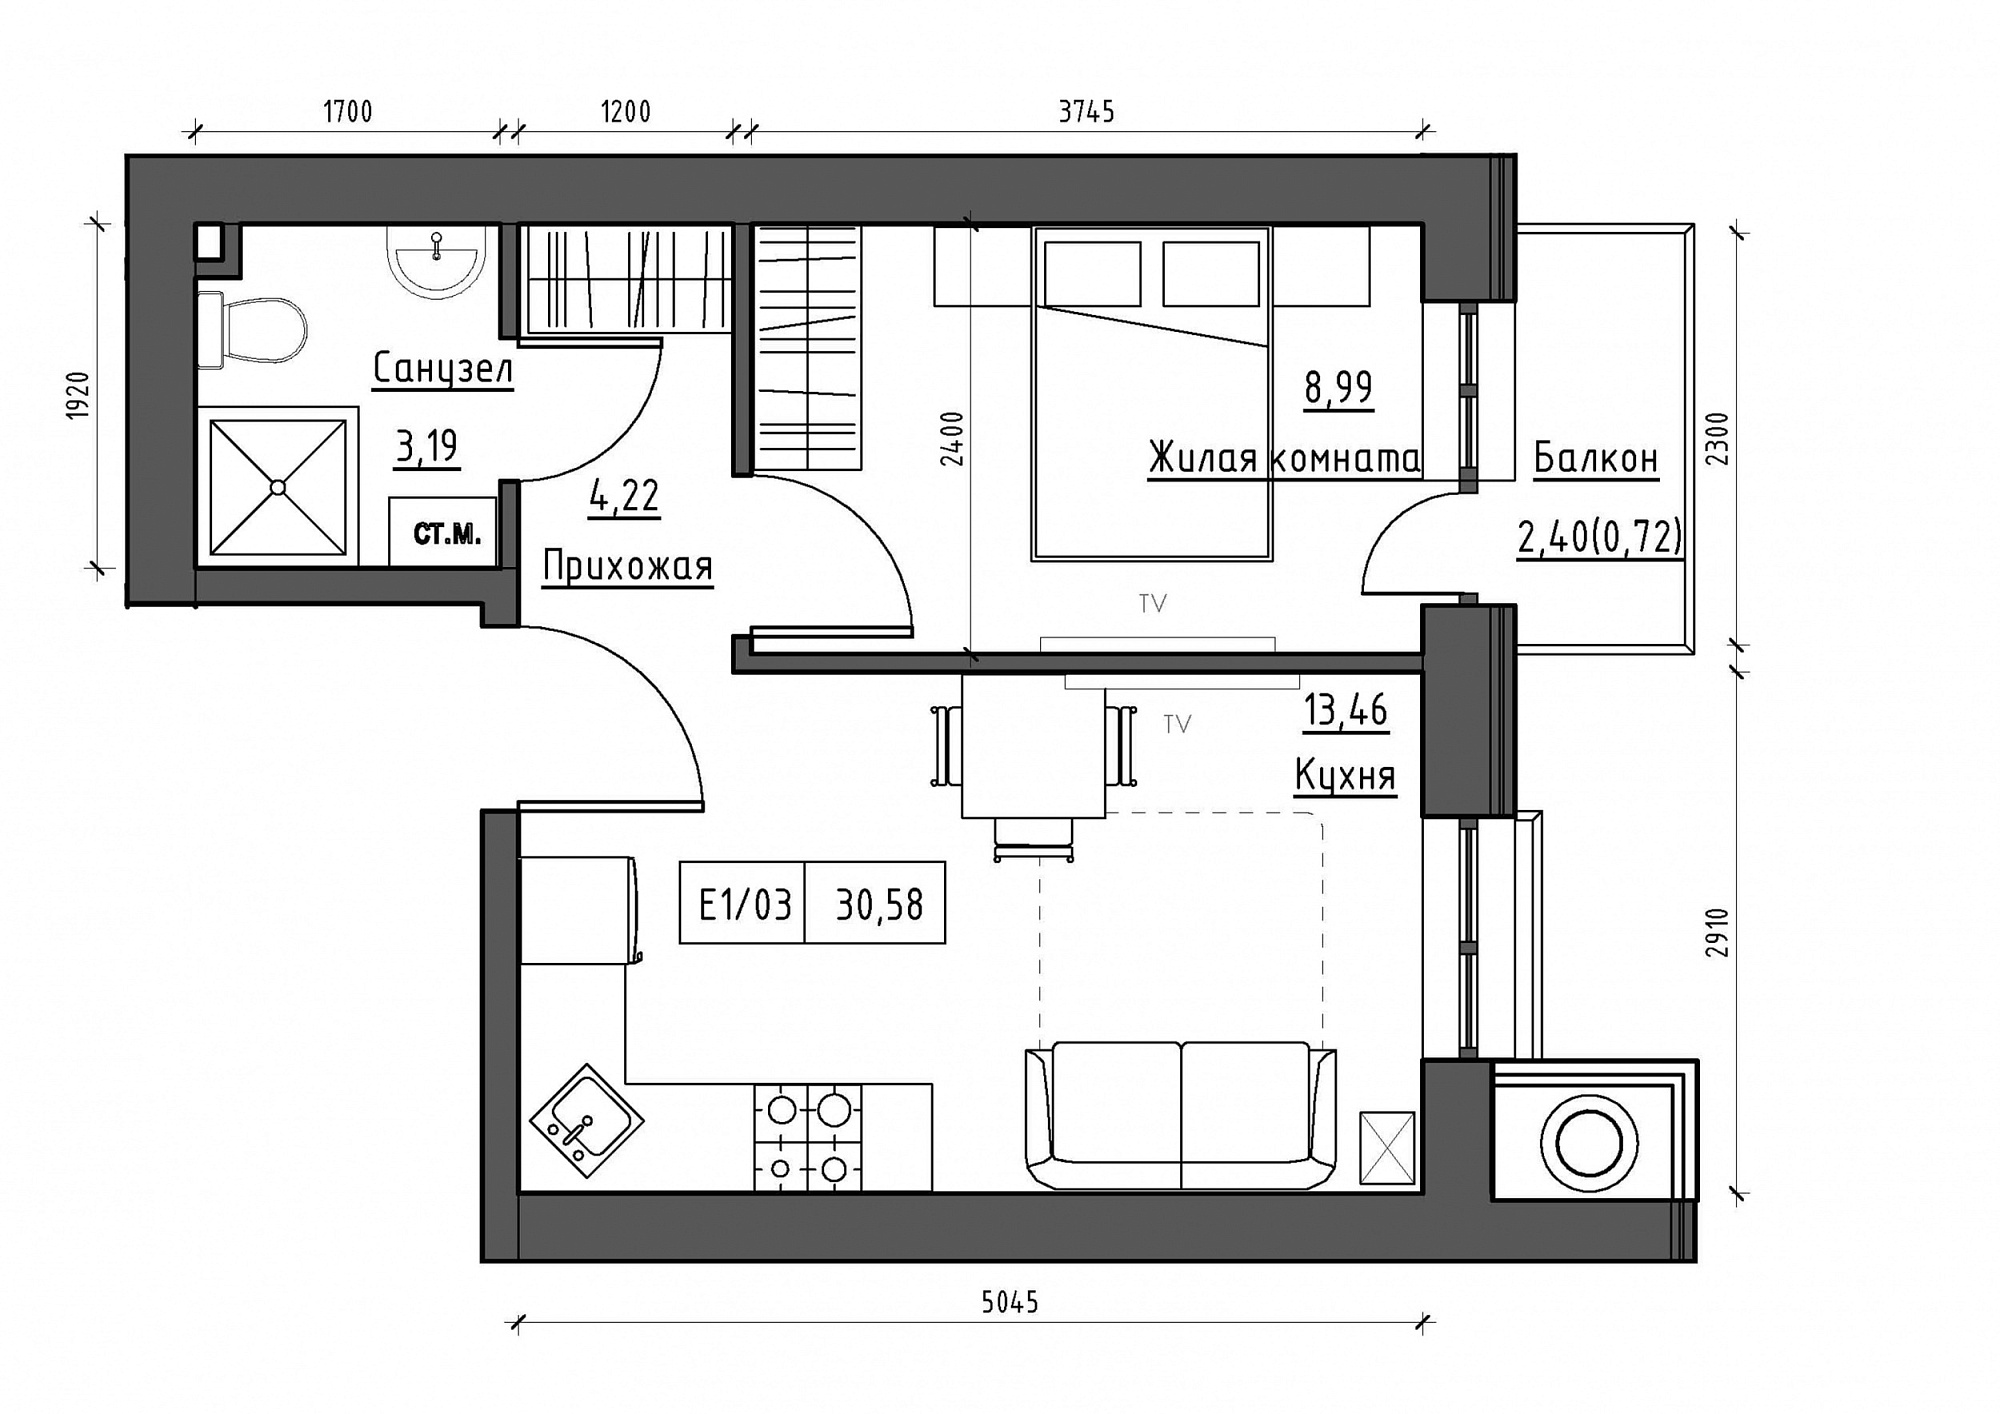 Planning 1-rm flats area 30.58m2, KS-012-04/0013.